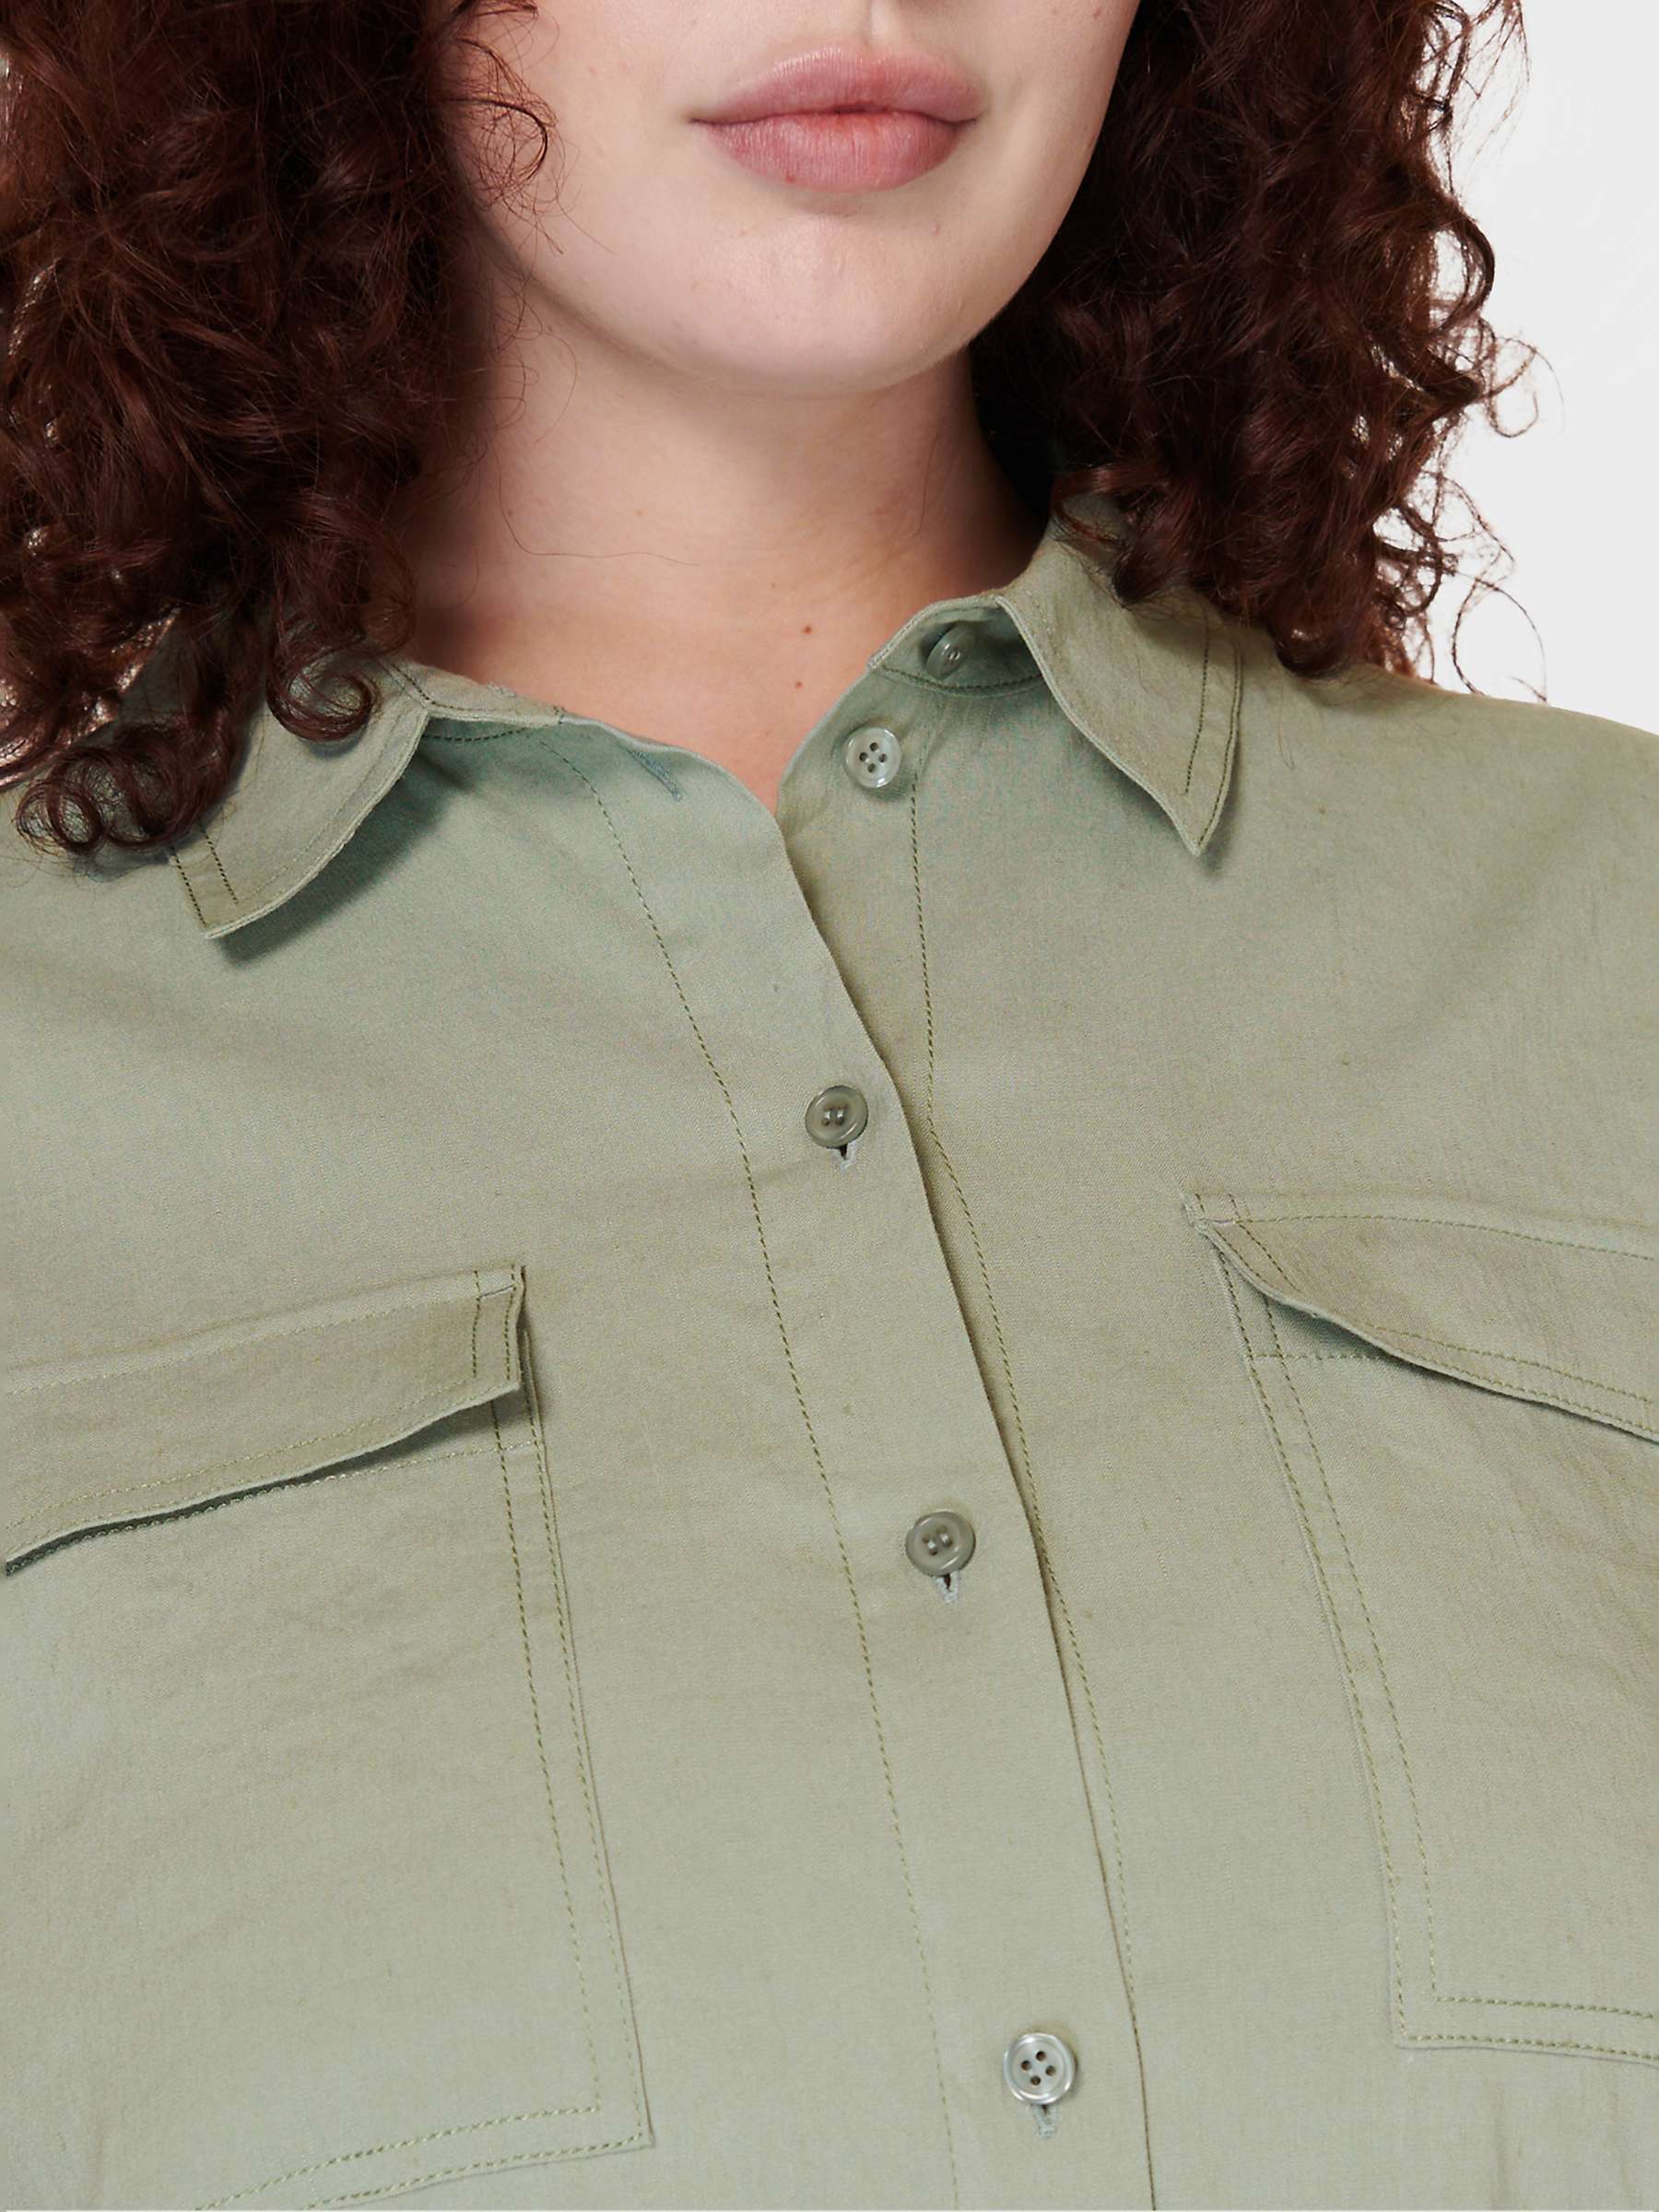 Buy Sweaty Betty Summer Stretch Linen Utility Shirt, Savannah Green Online at johnlewis.com